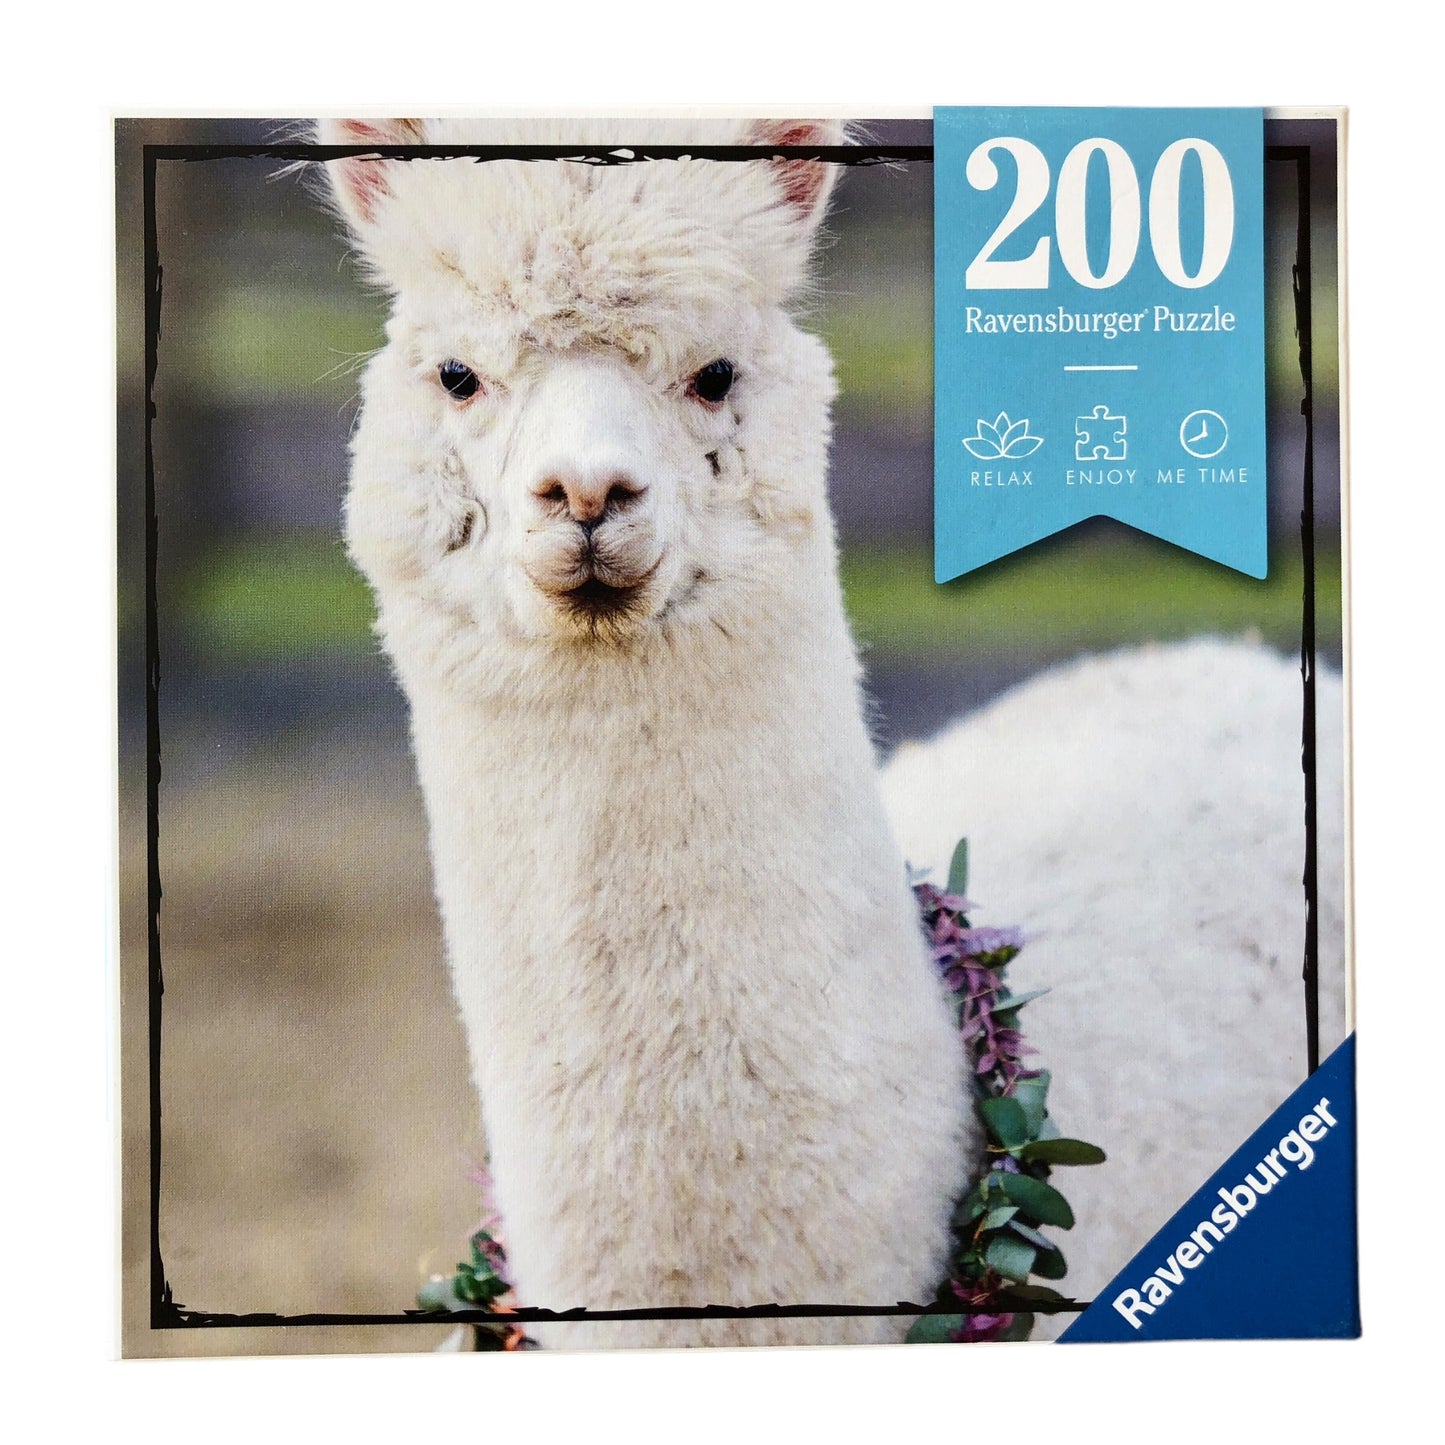 Ravensburger Puzzle - Alpaca - 200 pieces